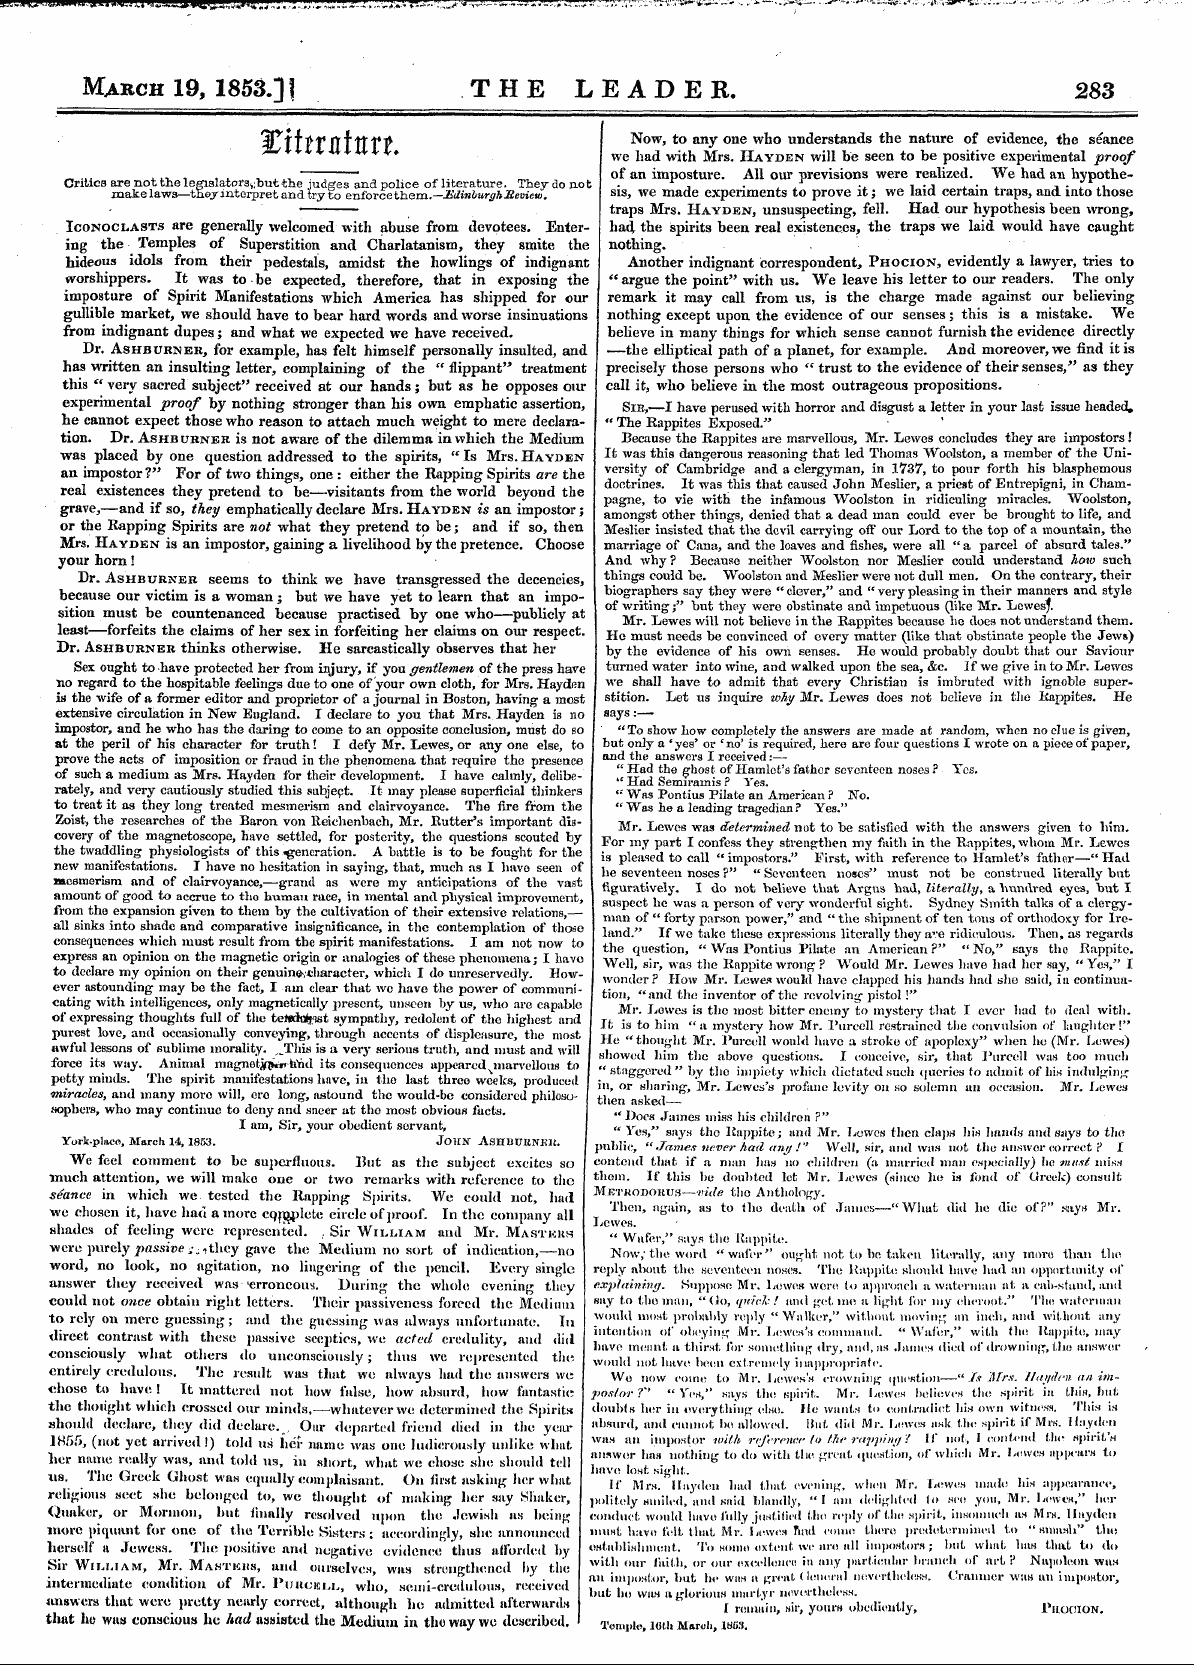 Leader (1850-1860): jS F Y, 1st edition - %Ttttatntt.